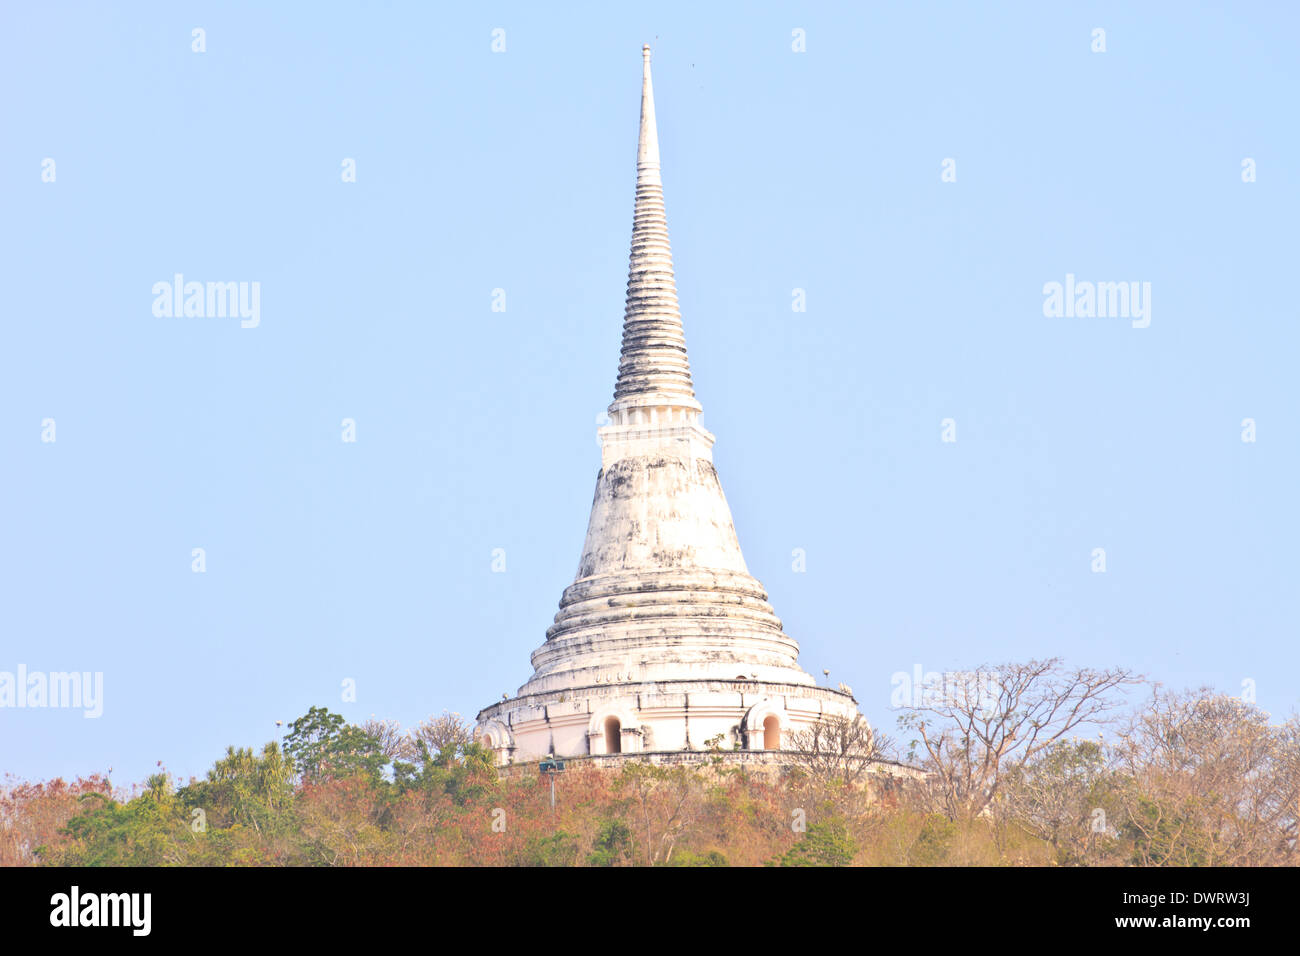 The Khao wung palace at petchburi province,Thailand Stock Photo